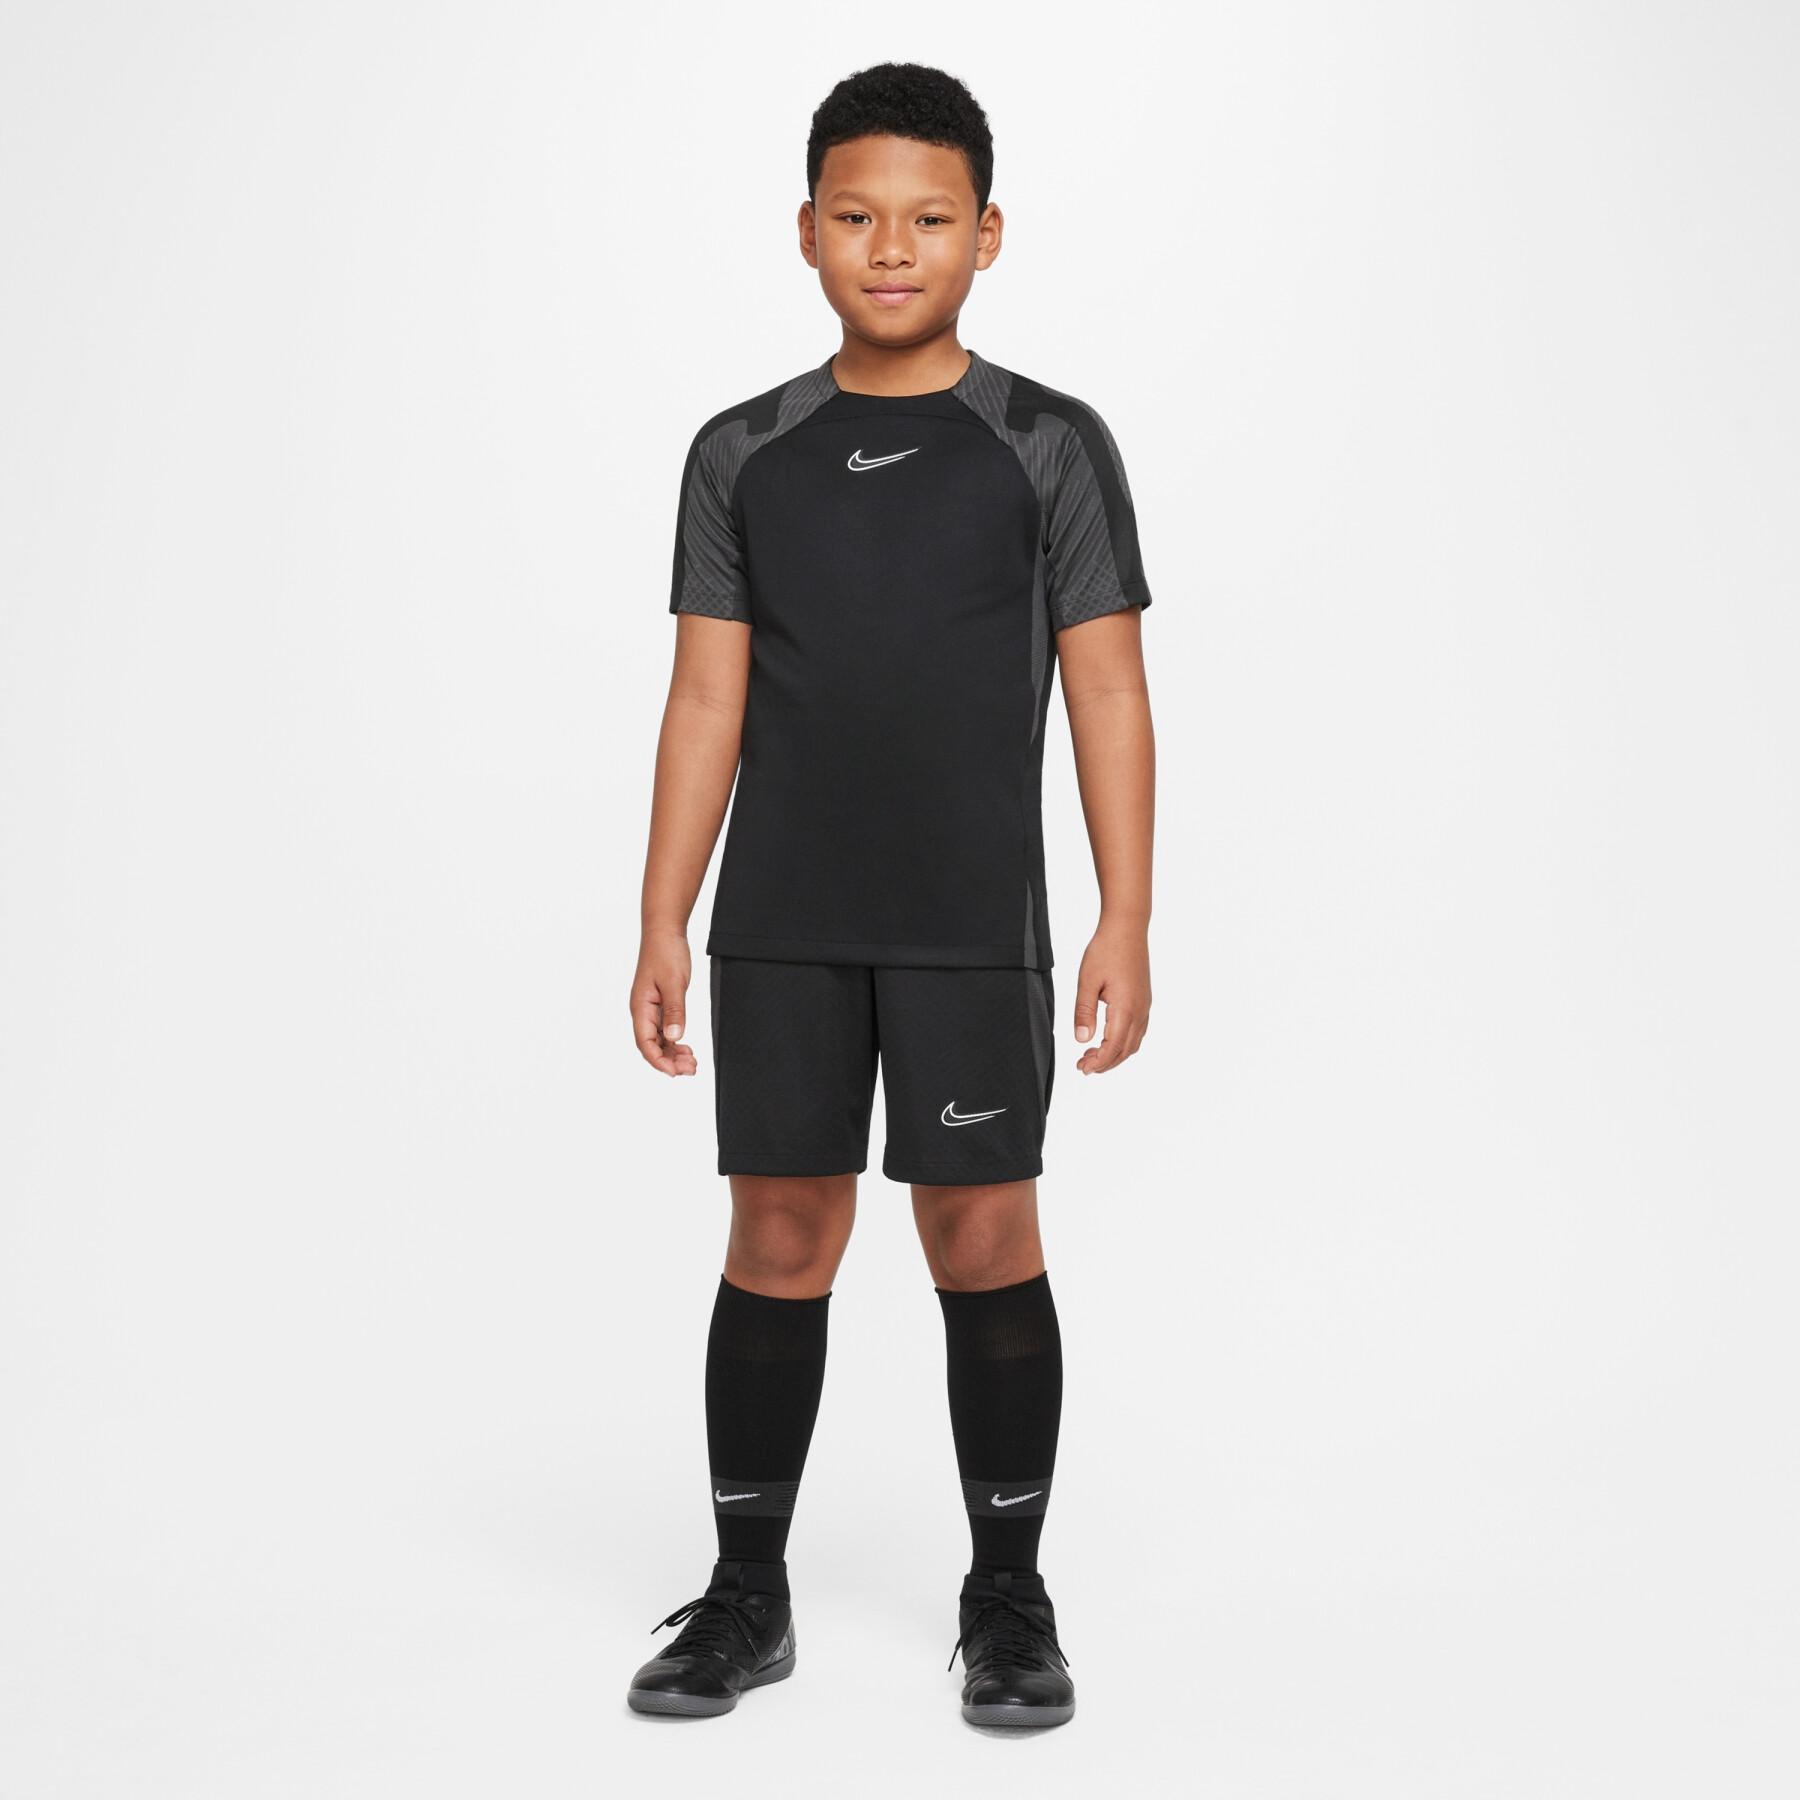 Children's jersey Nike Dri-FIT Strike